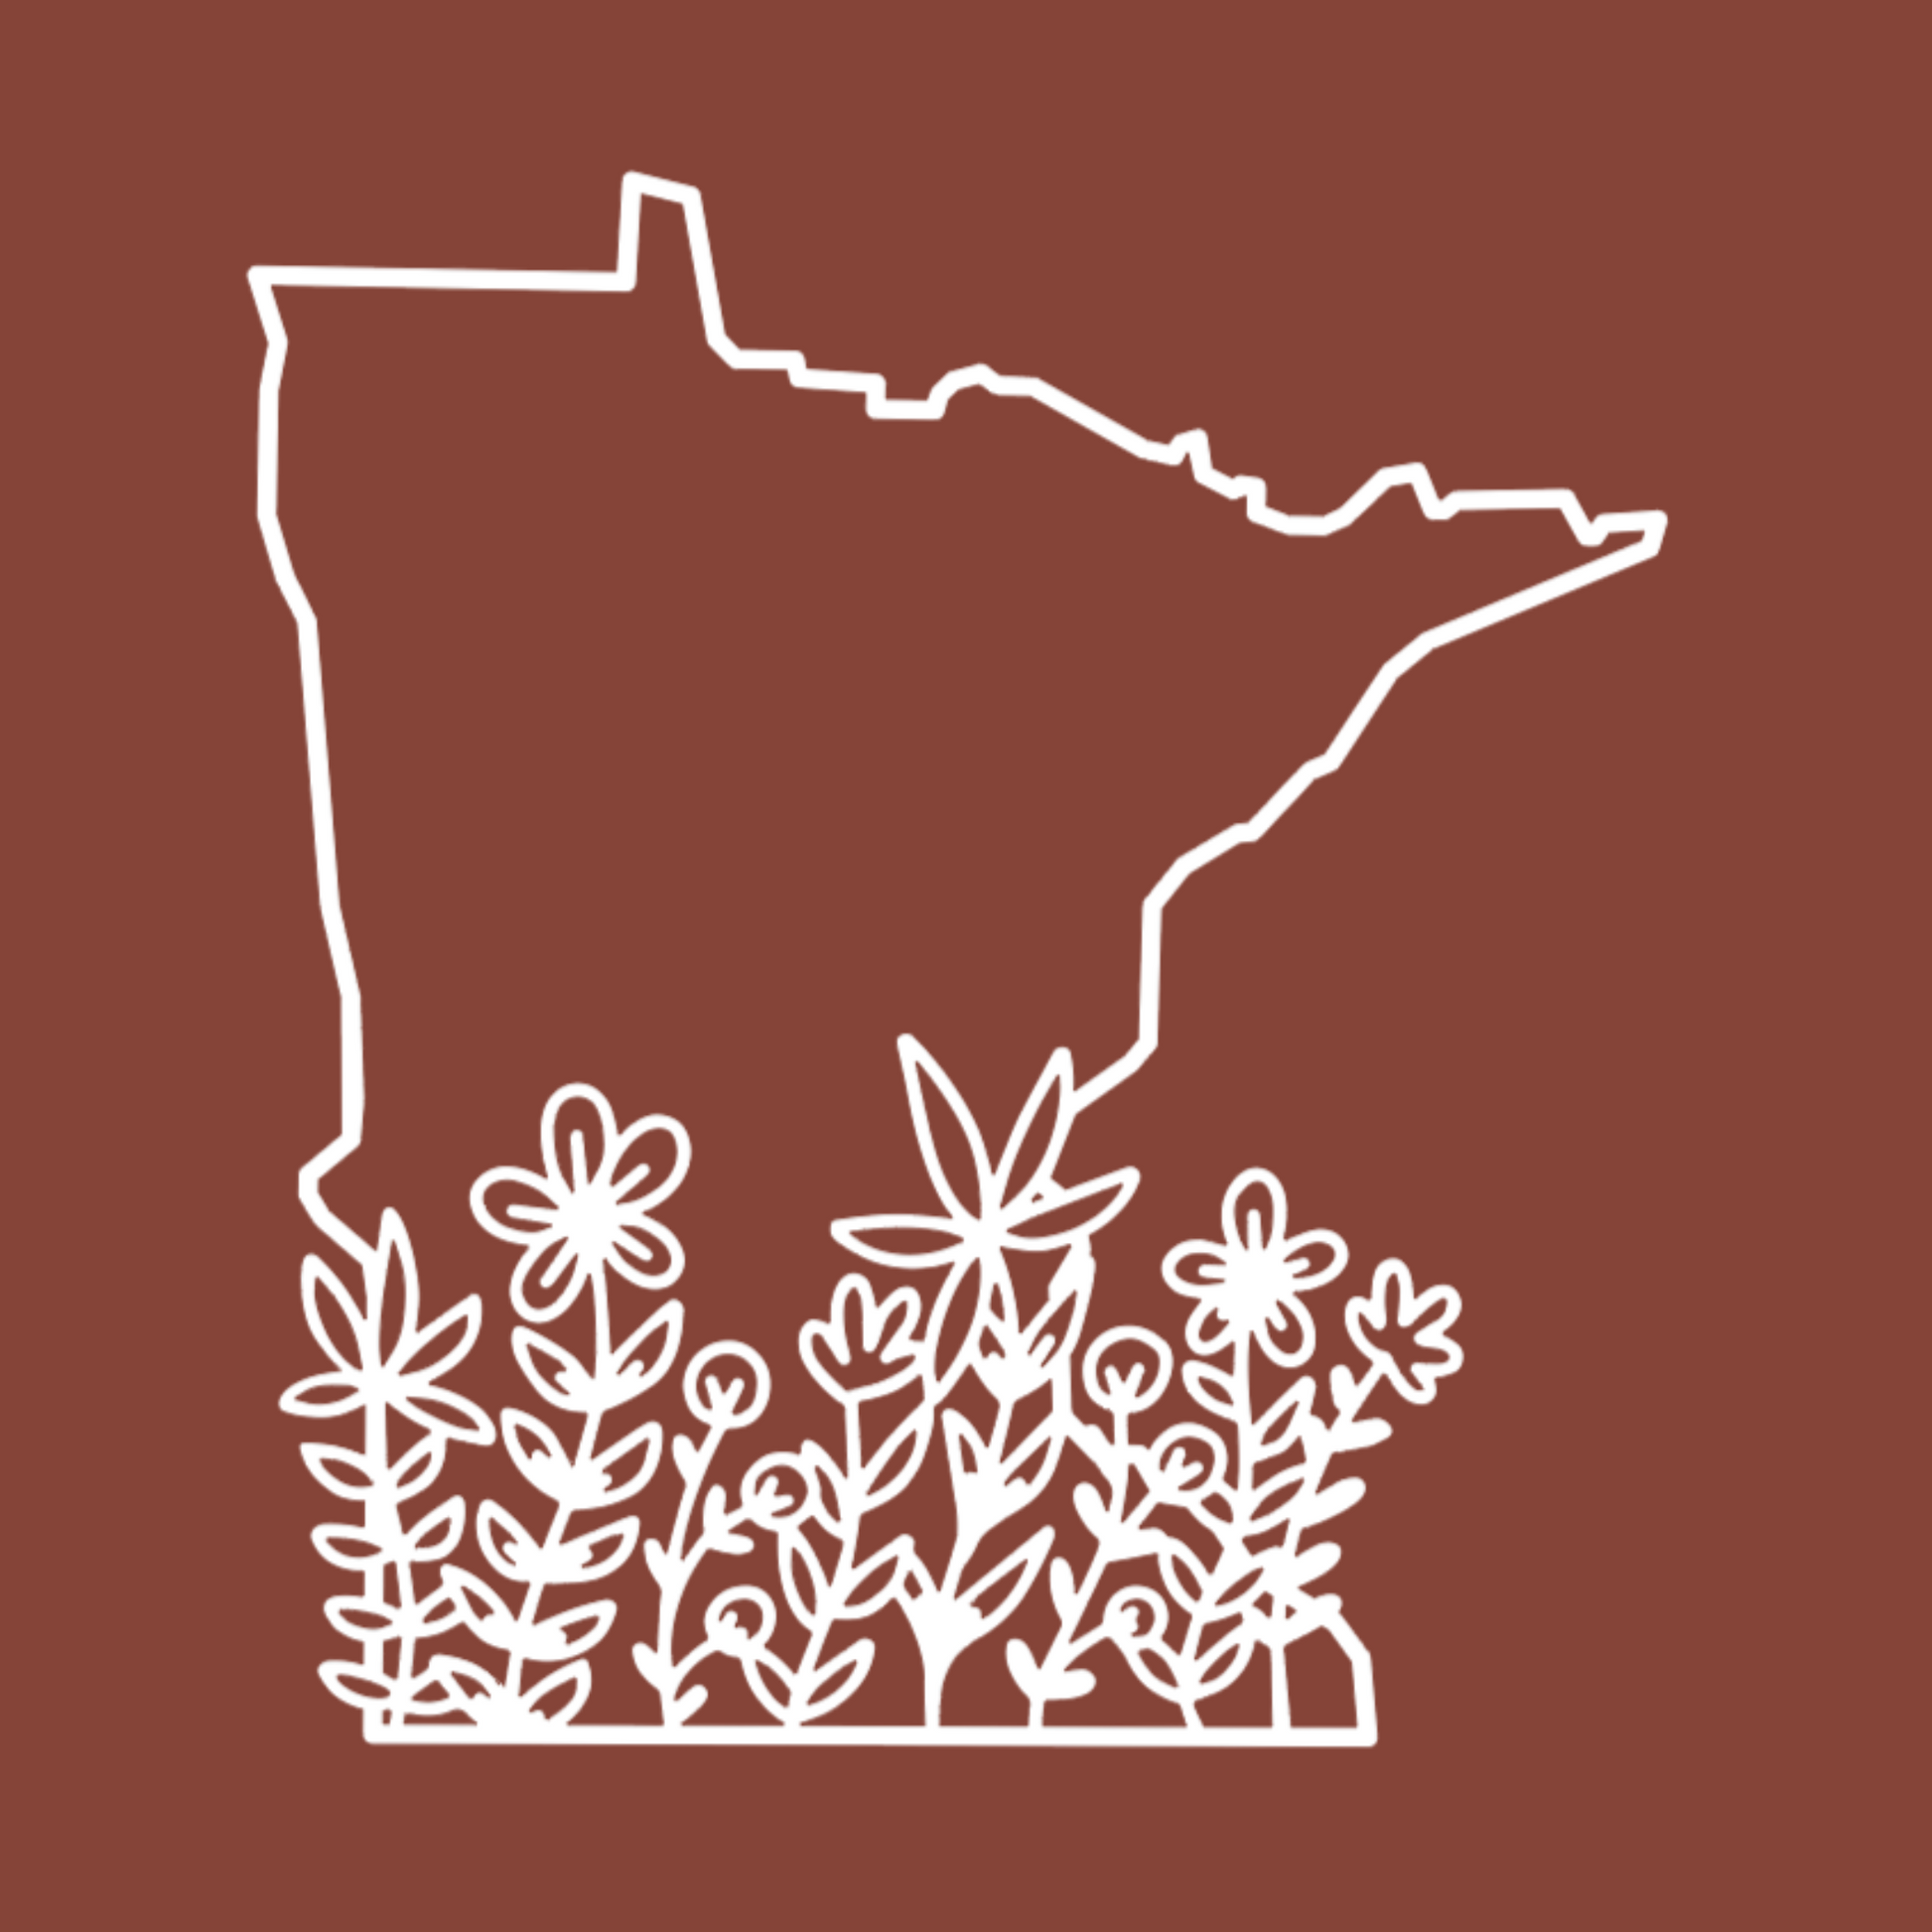 State of Minnesota Floral Flower Design